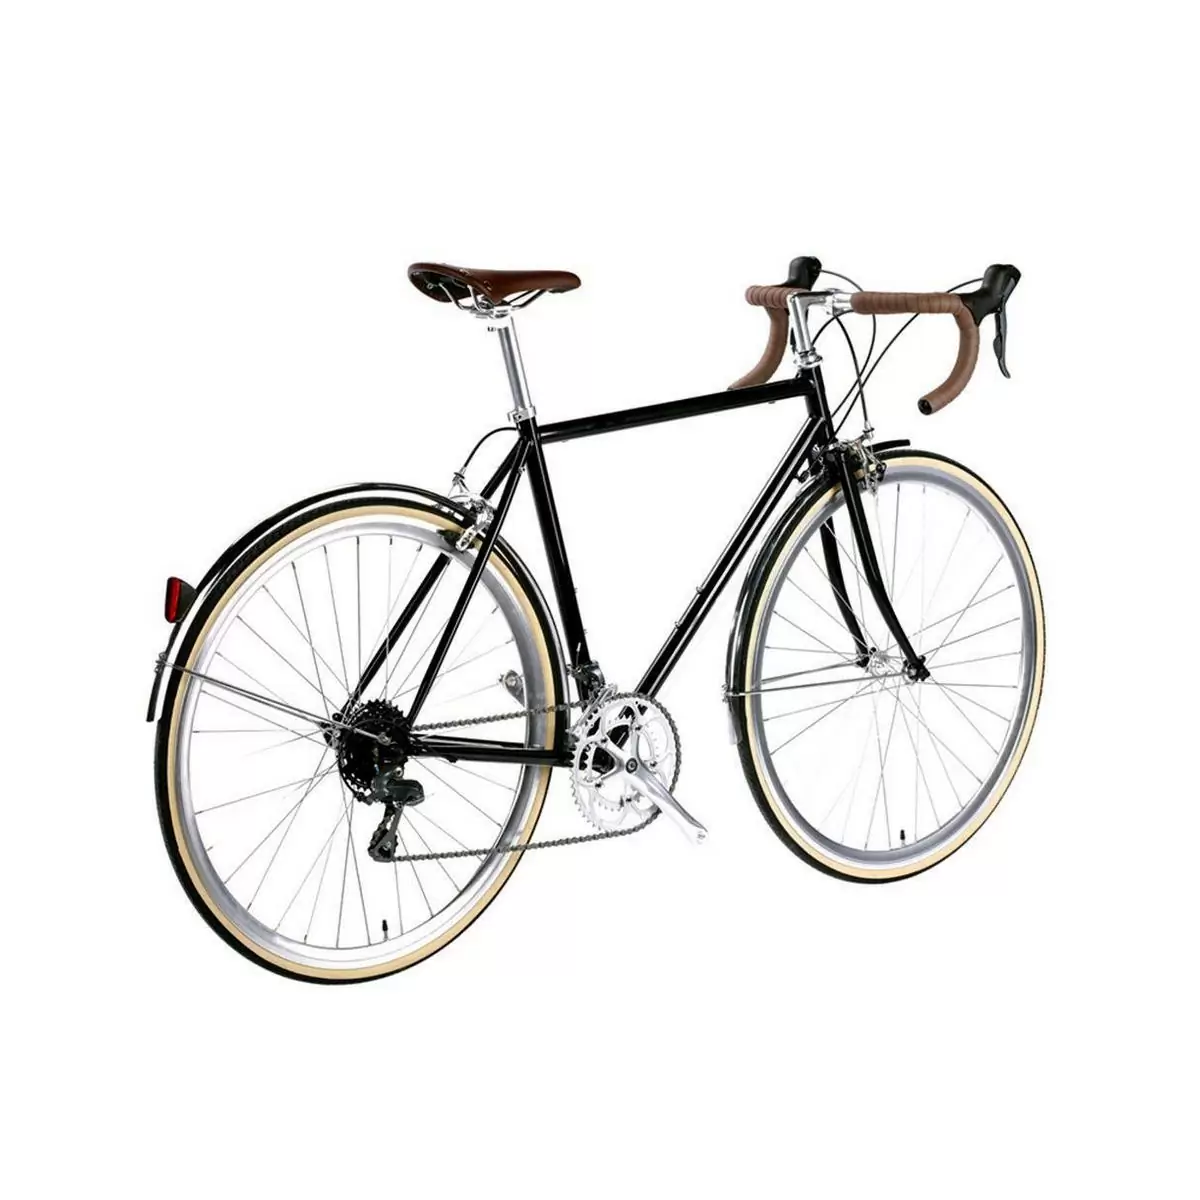 Bicicleta urbana TROY 16spd Del Rey preta grande 58cm #2